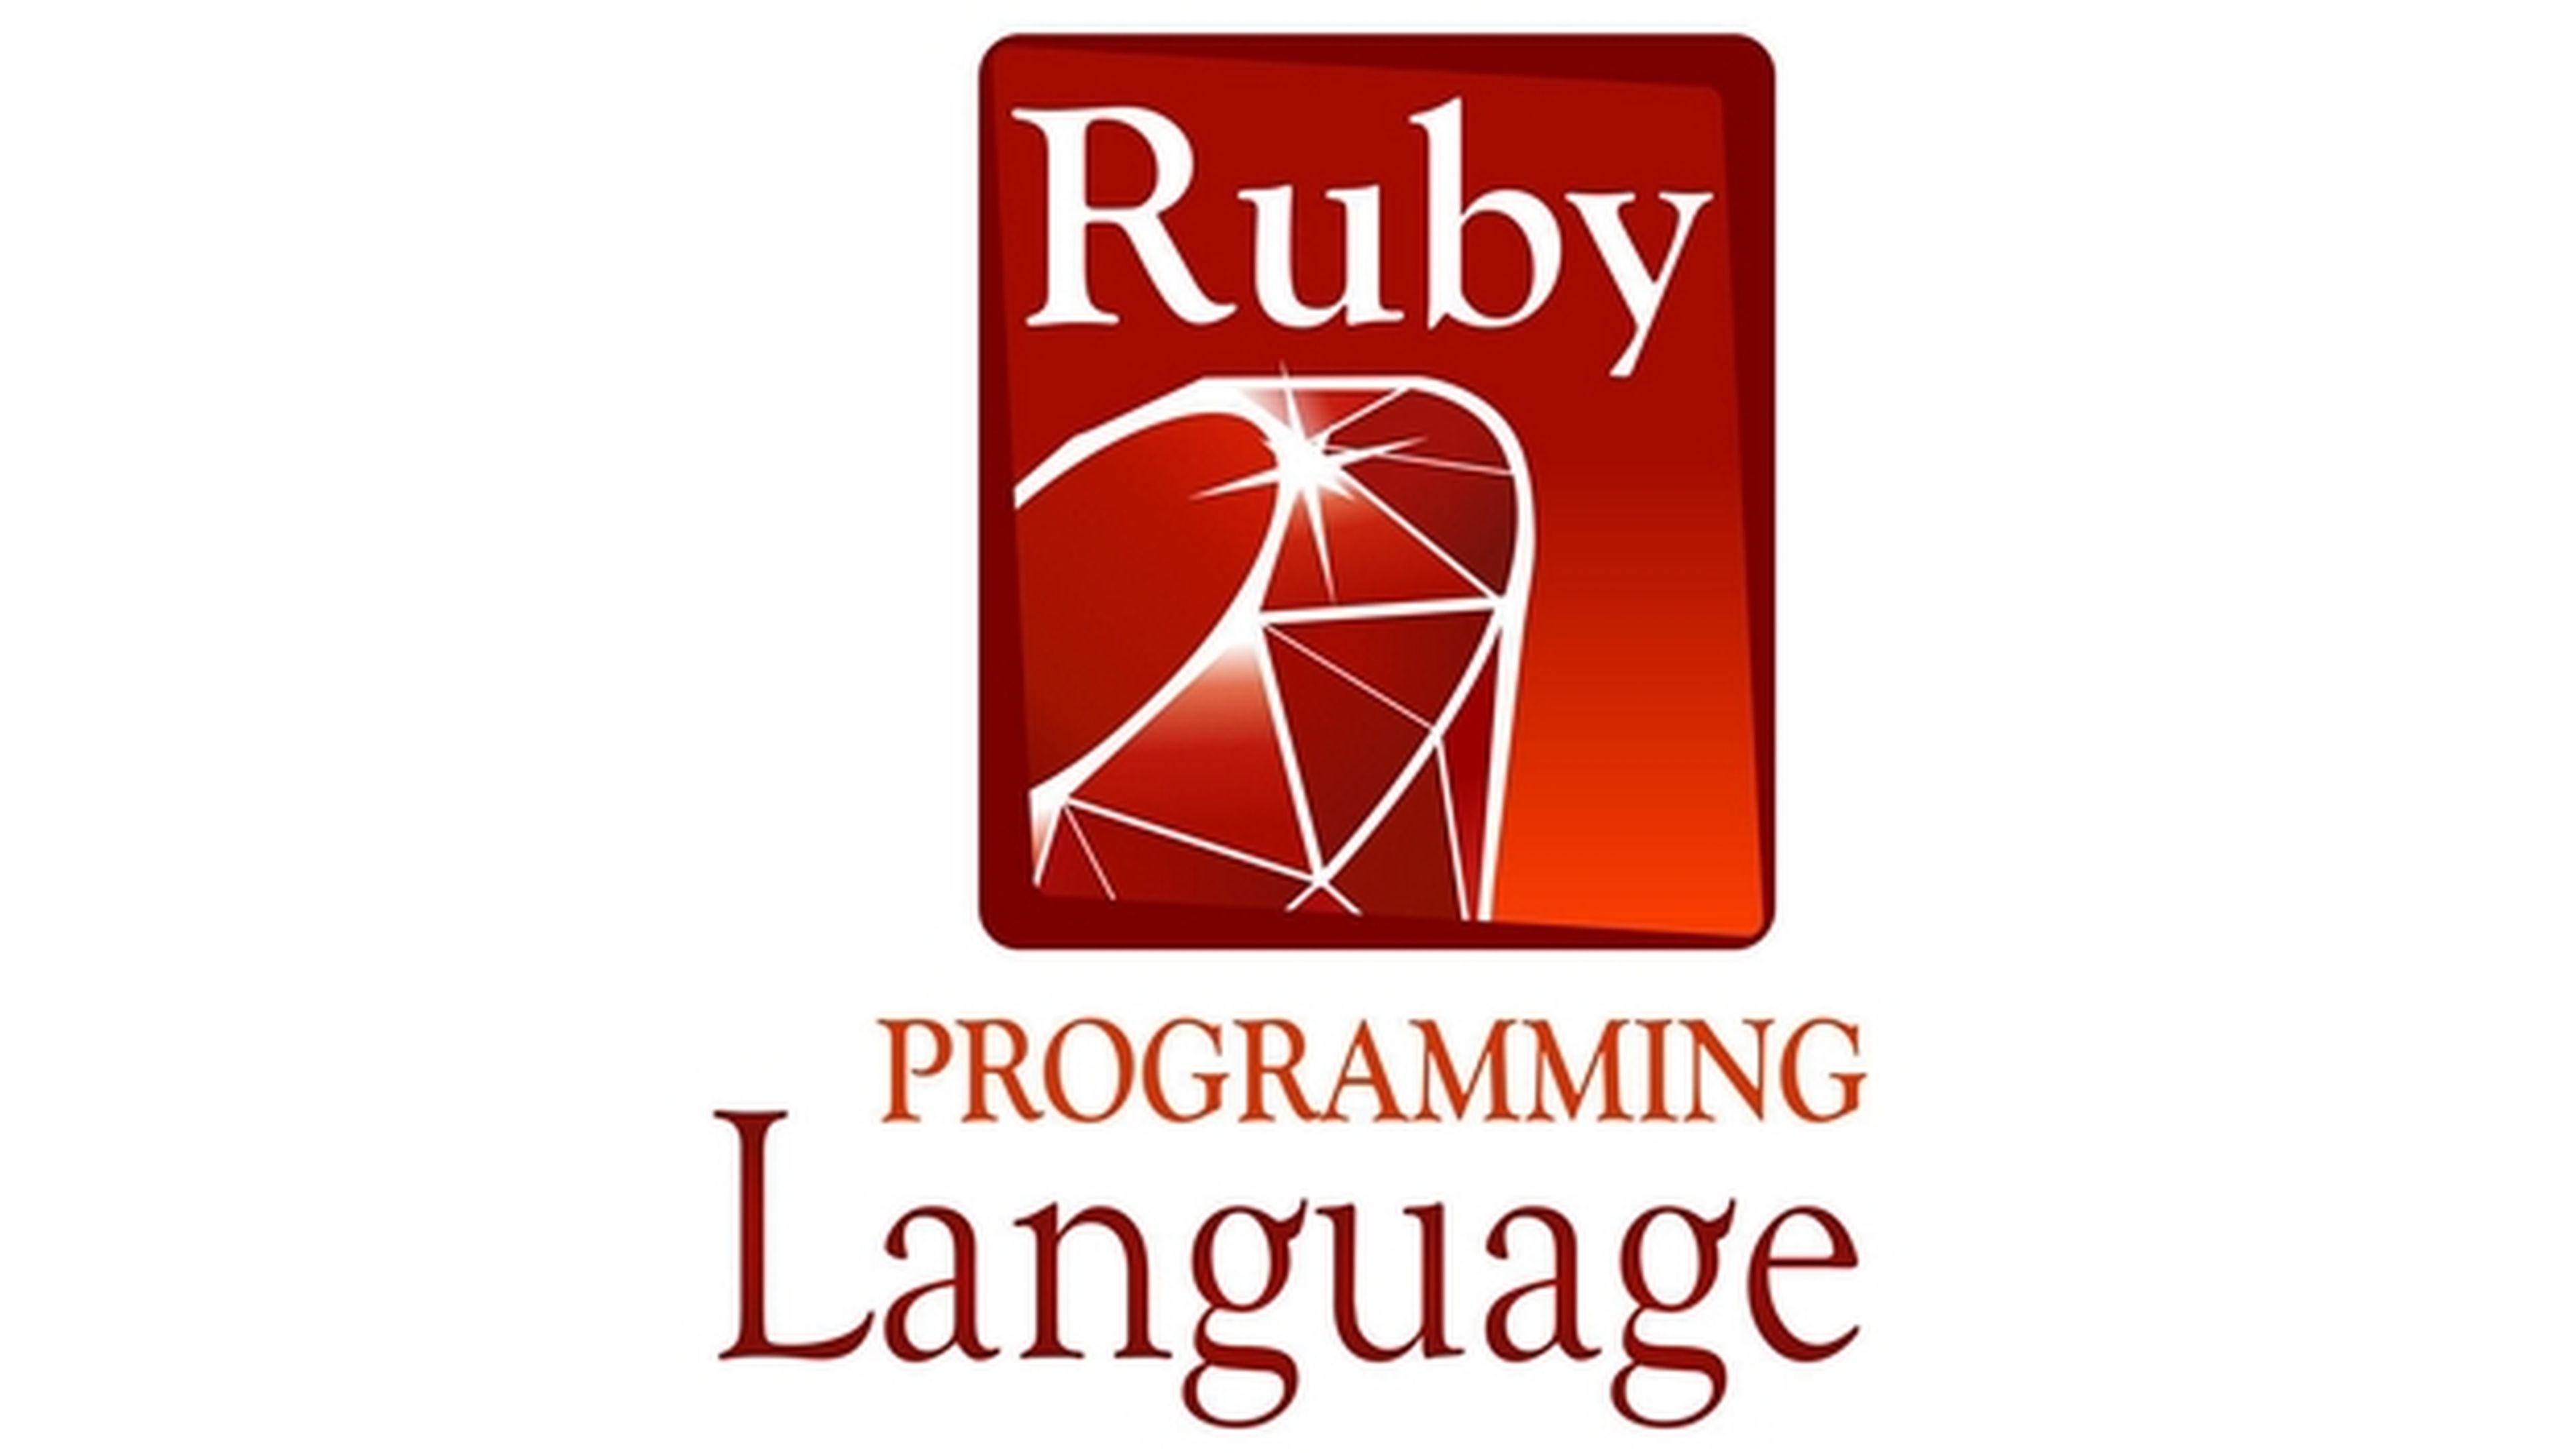 Руби руби ruby. Ruby язык программирования. Ruby программирование. Язык программирования Раби. Ruby программист.